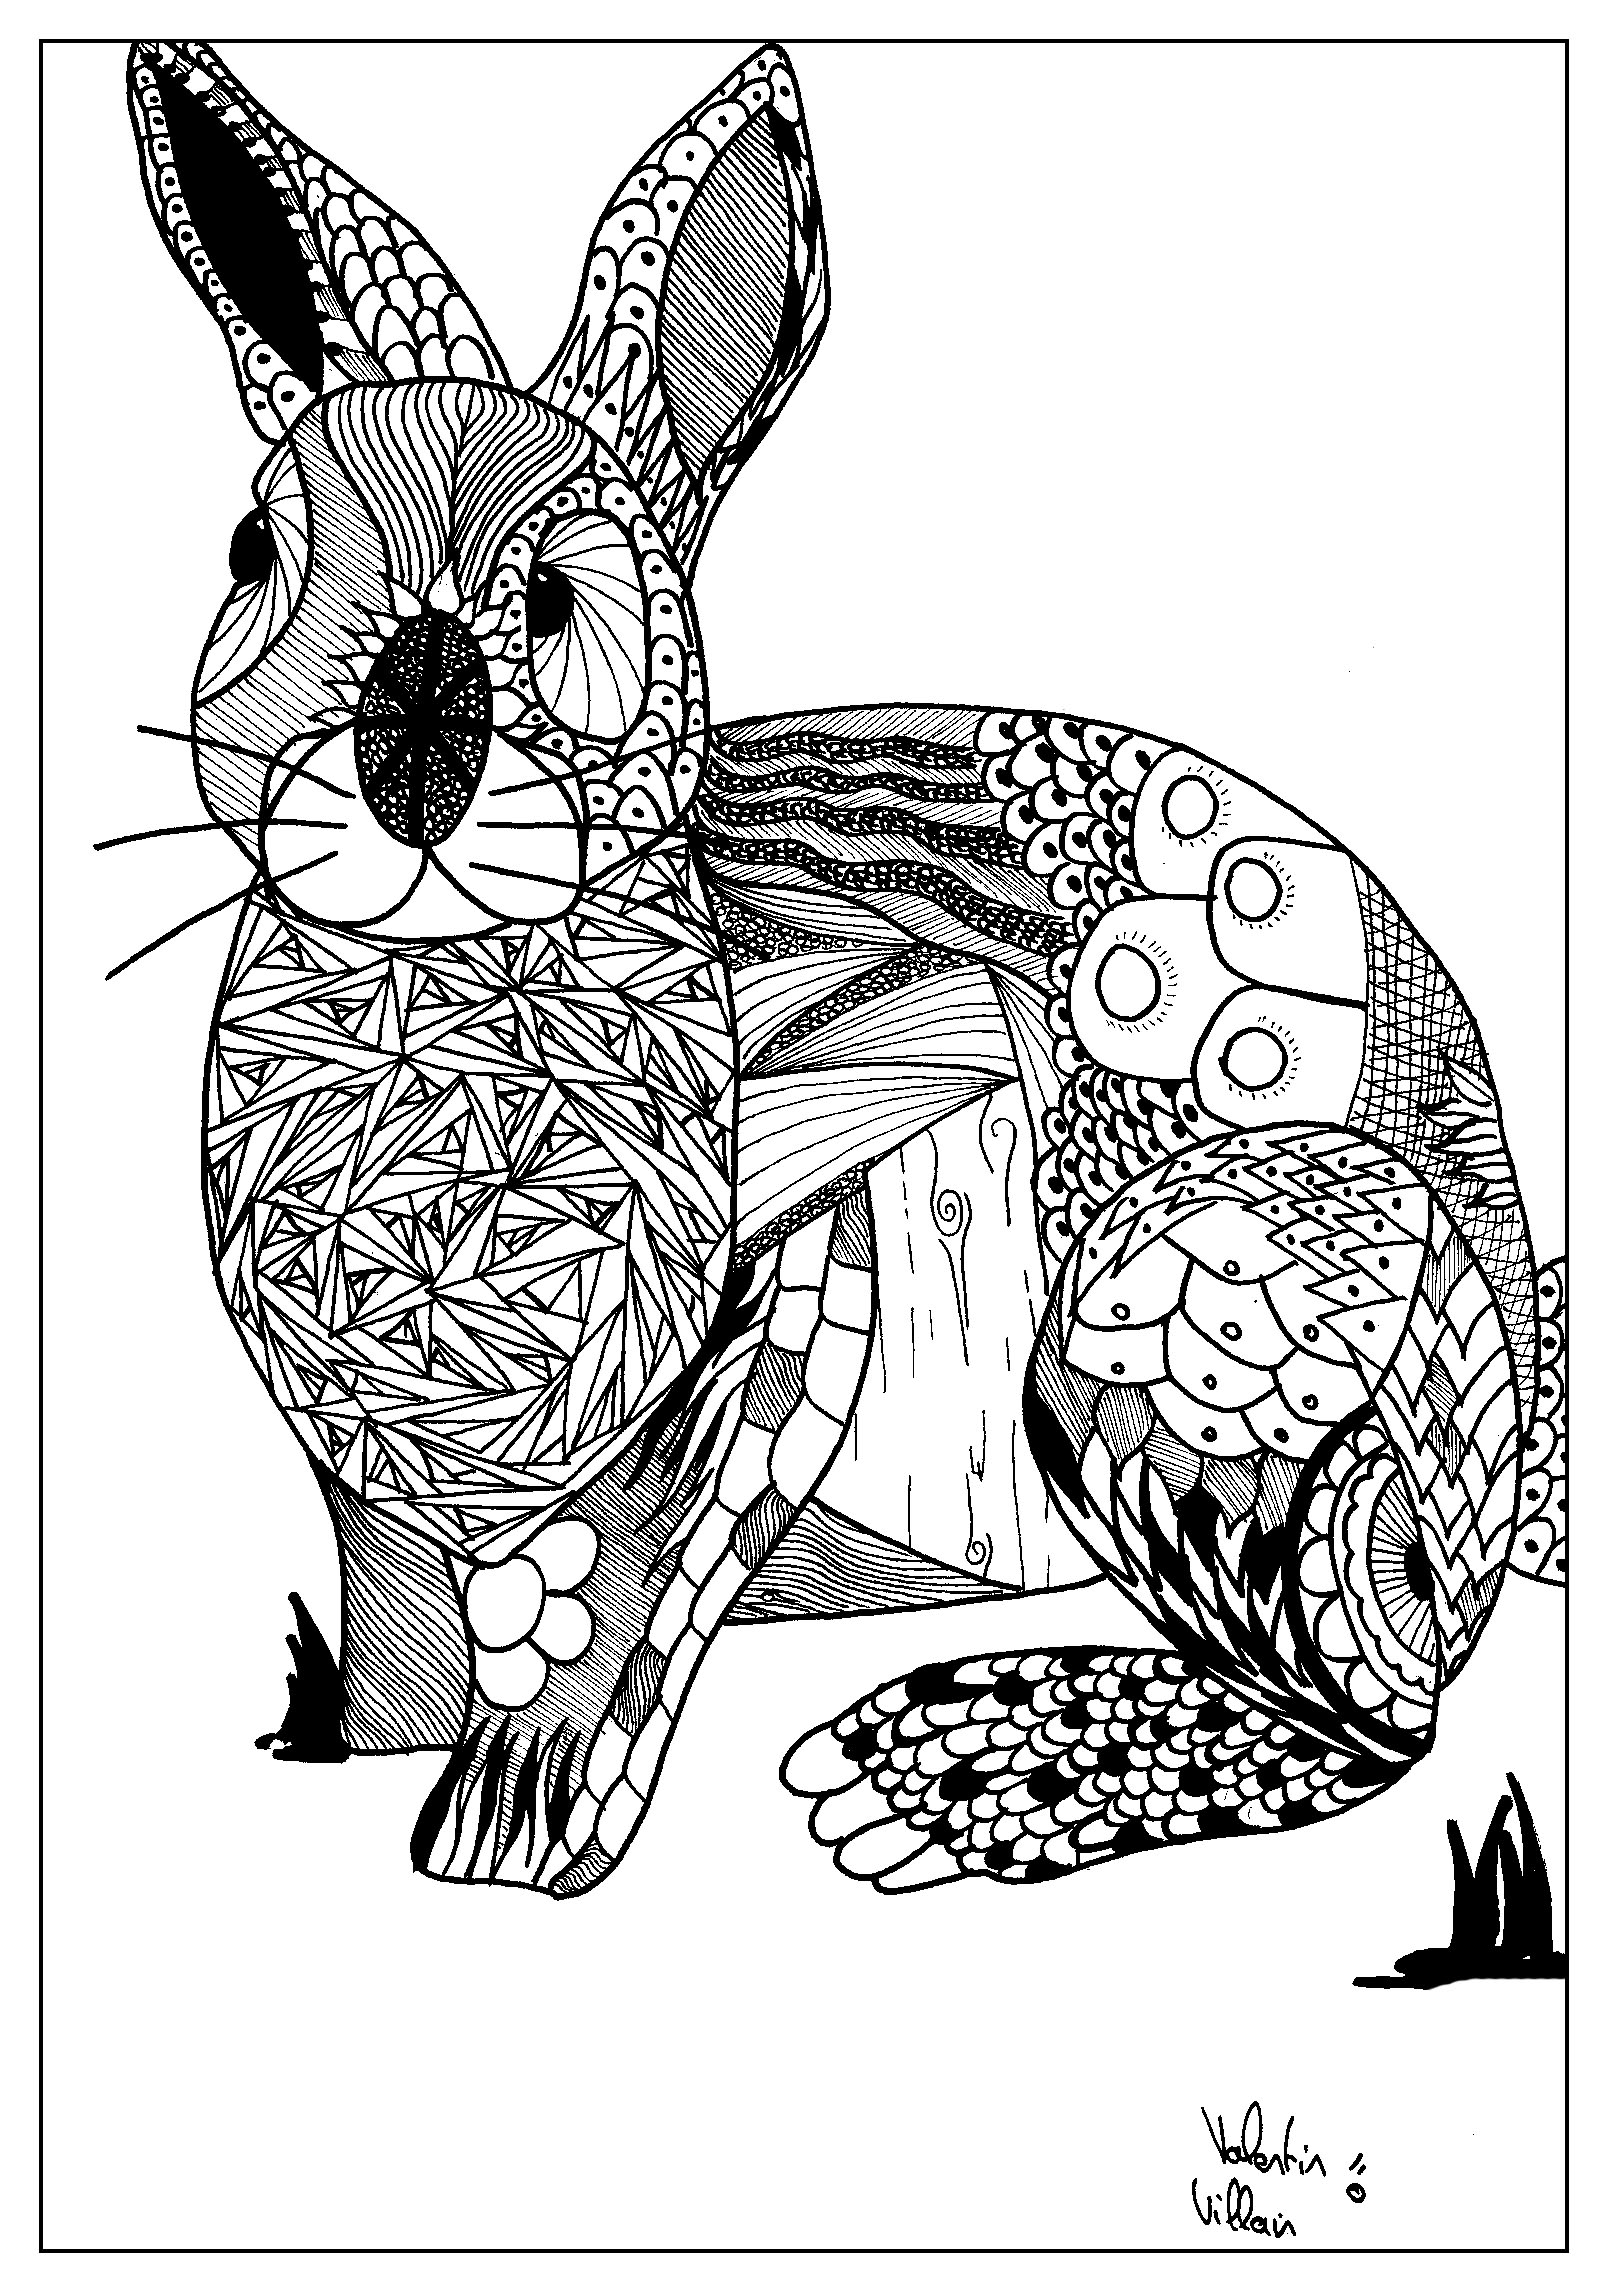 Conejo dibujado con estilo Zentangle